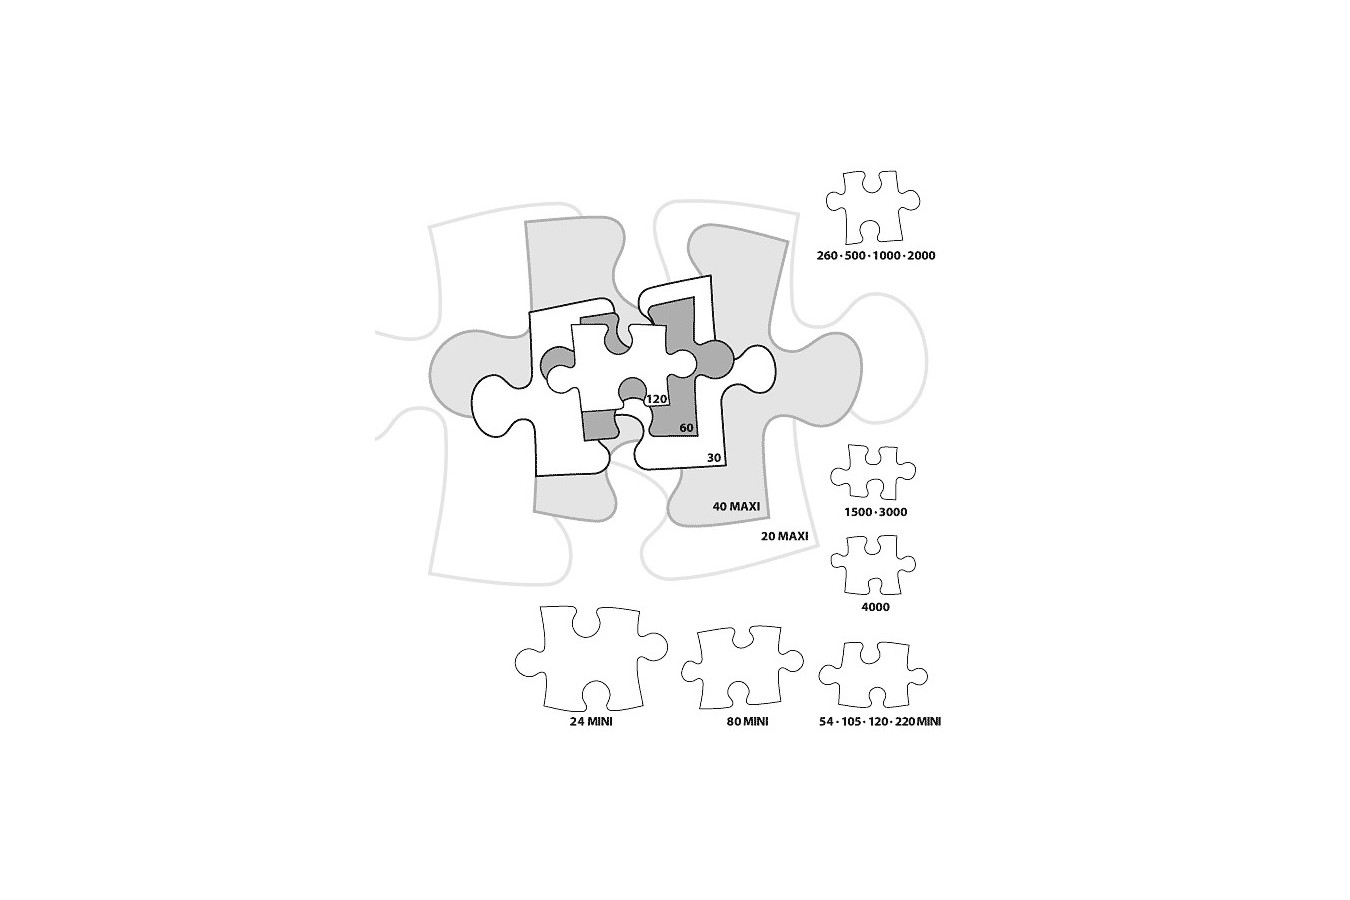 Puzzle Castorland Maxi - Noahs Ark, 40 Piese